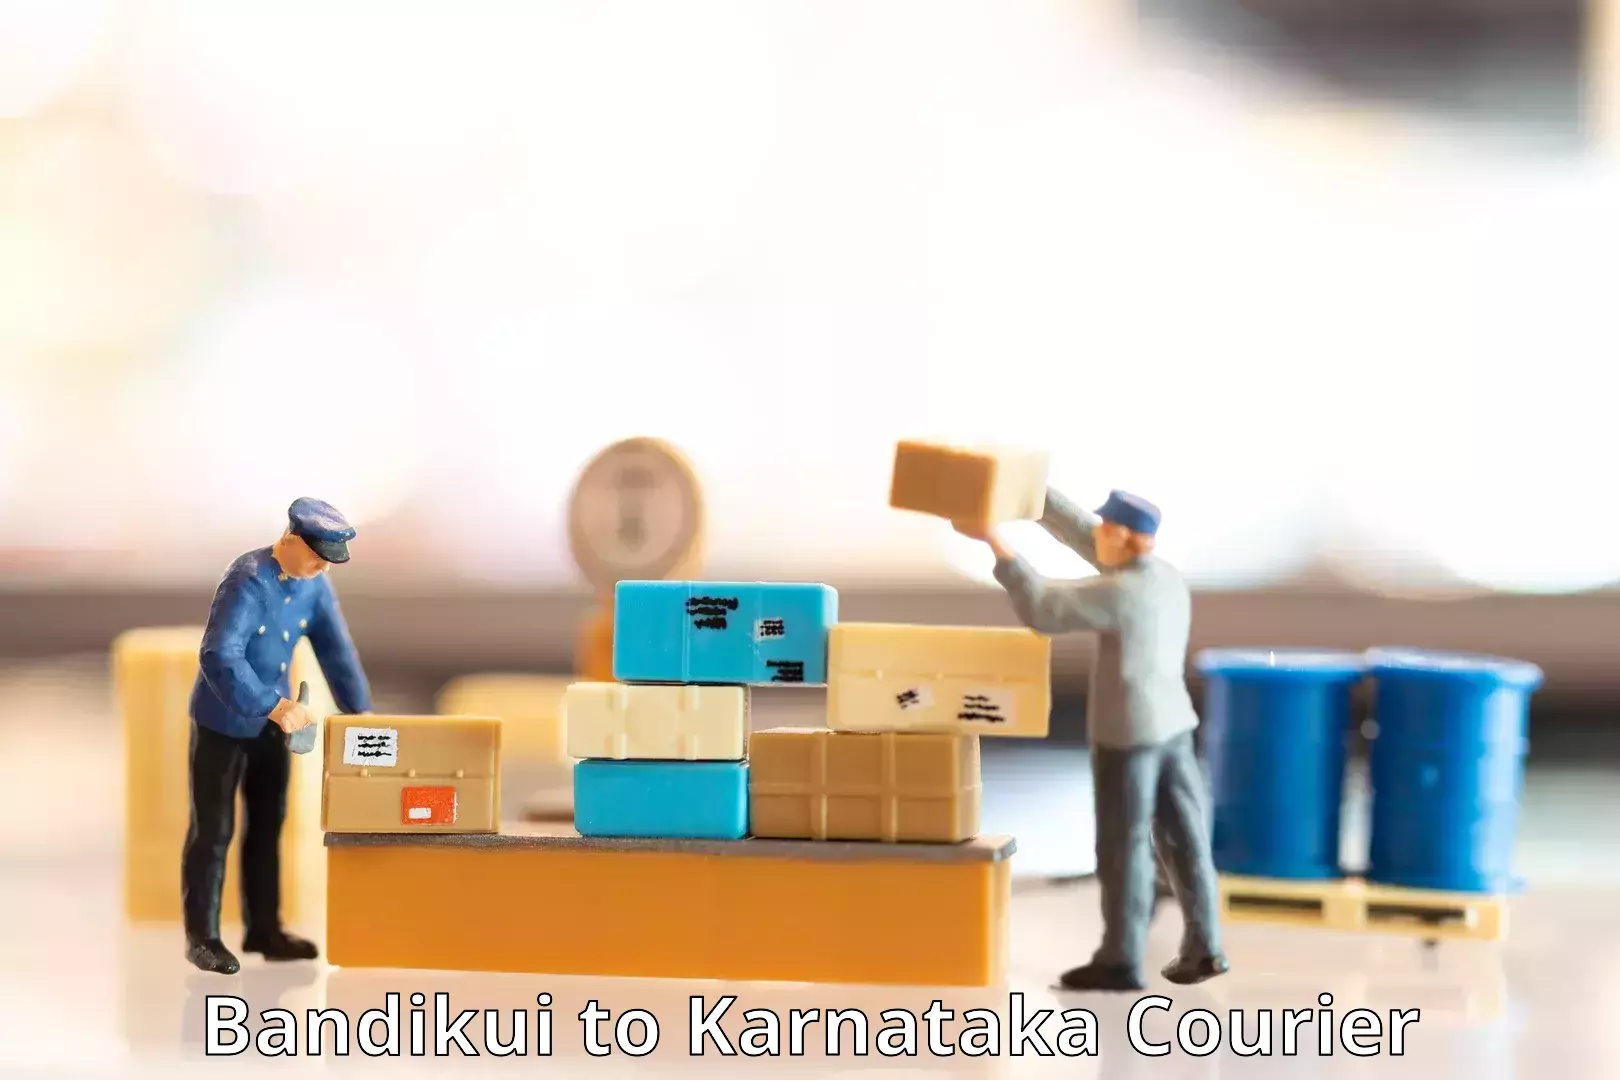 Global courier networks Bandikui to Karnataka